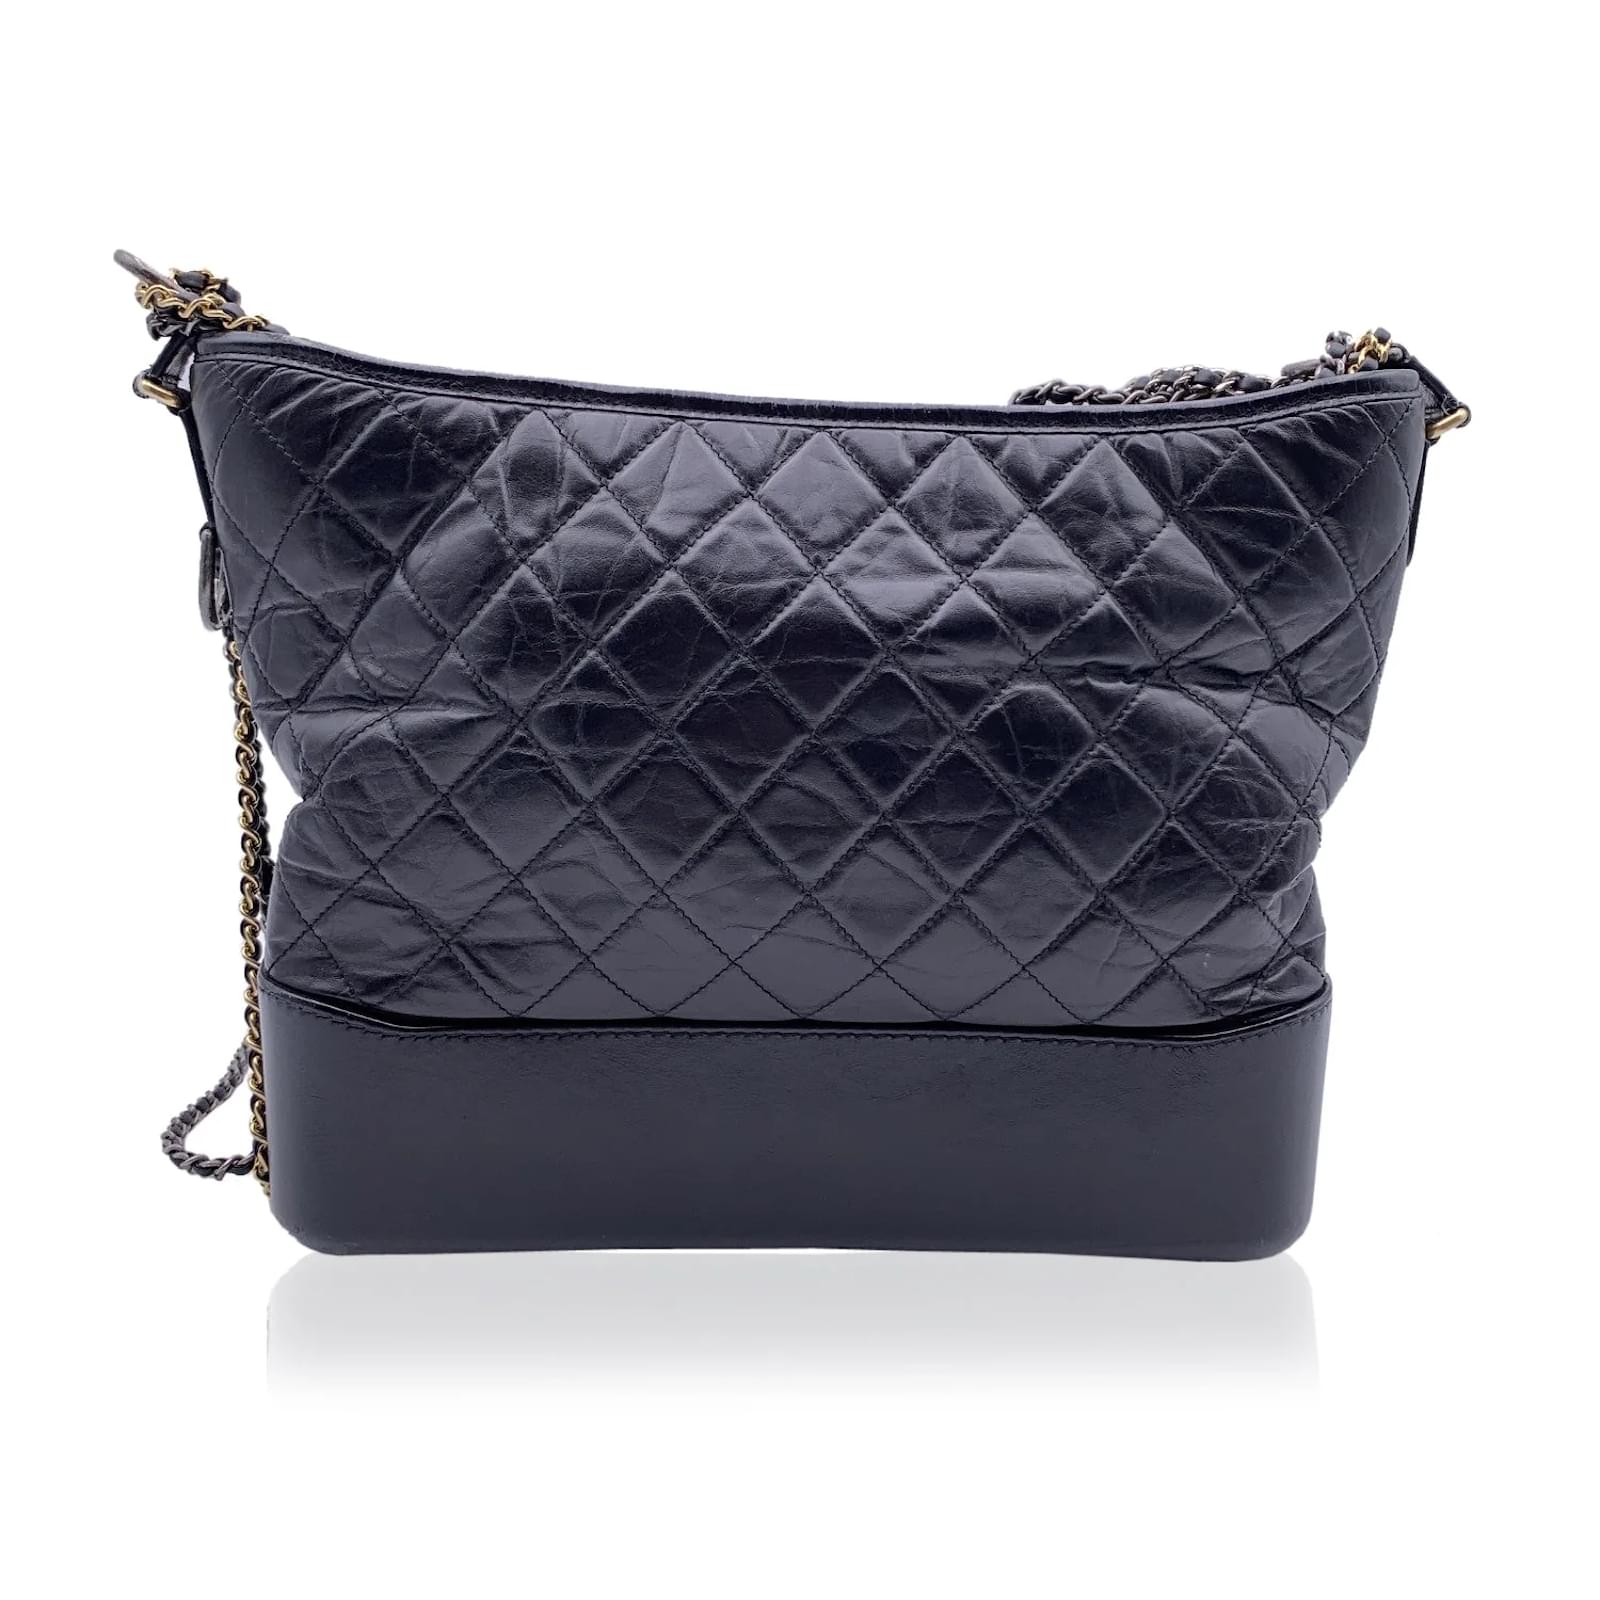 Handbags Chanel Chanel Shoulder Bag Gabrielle